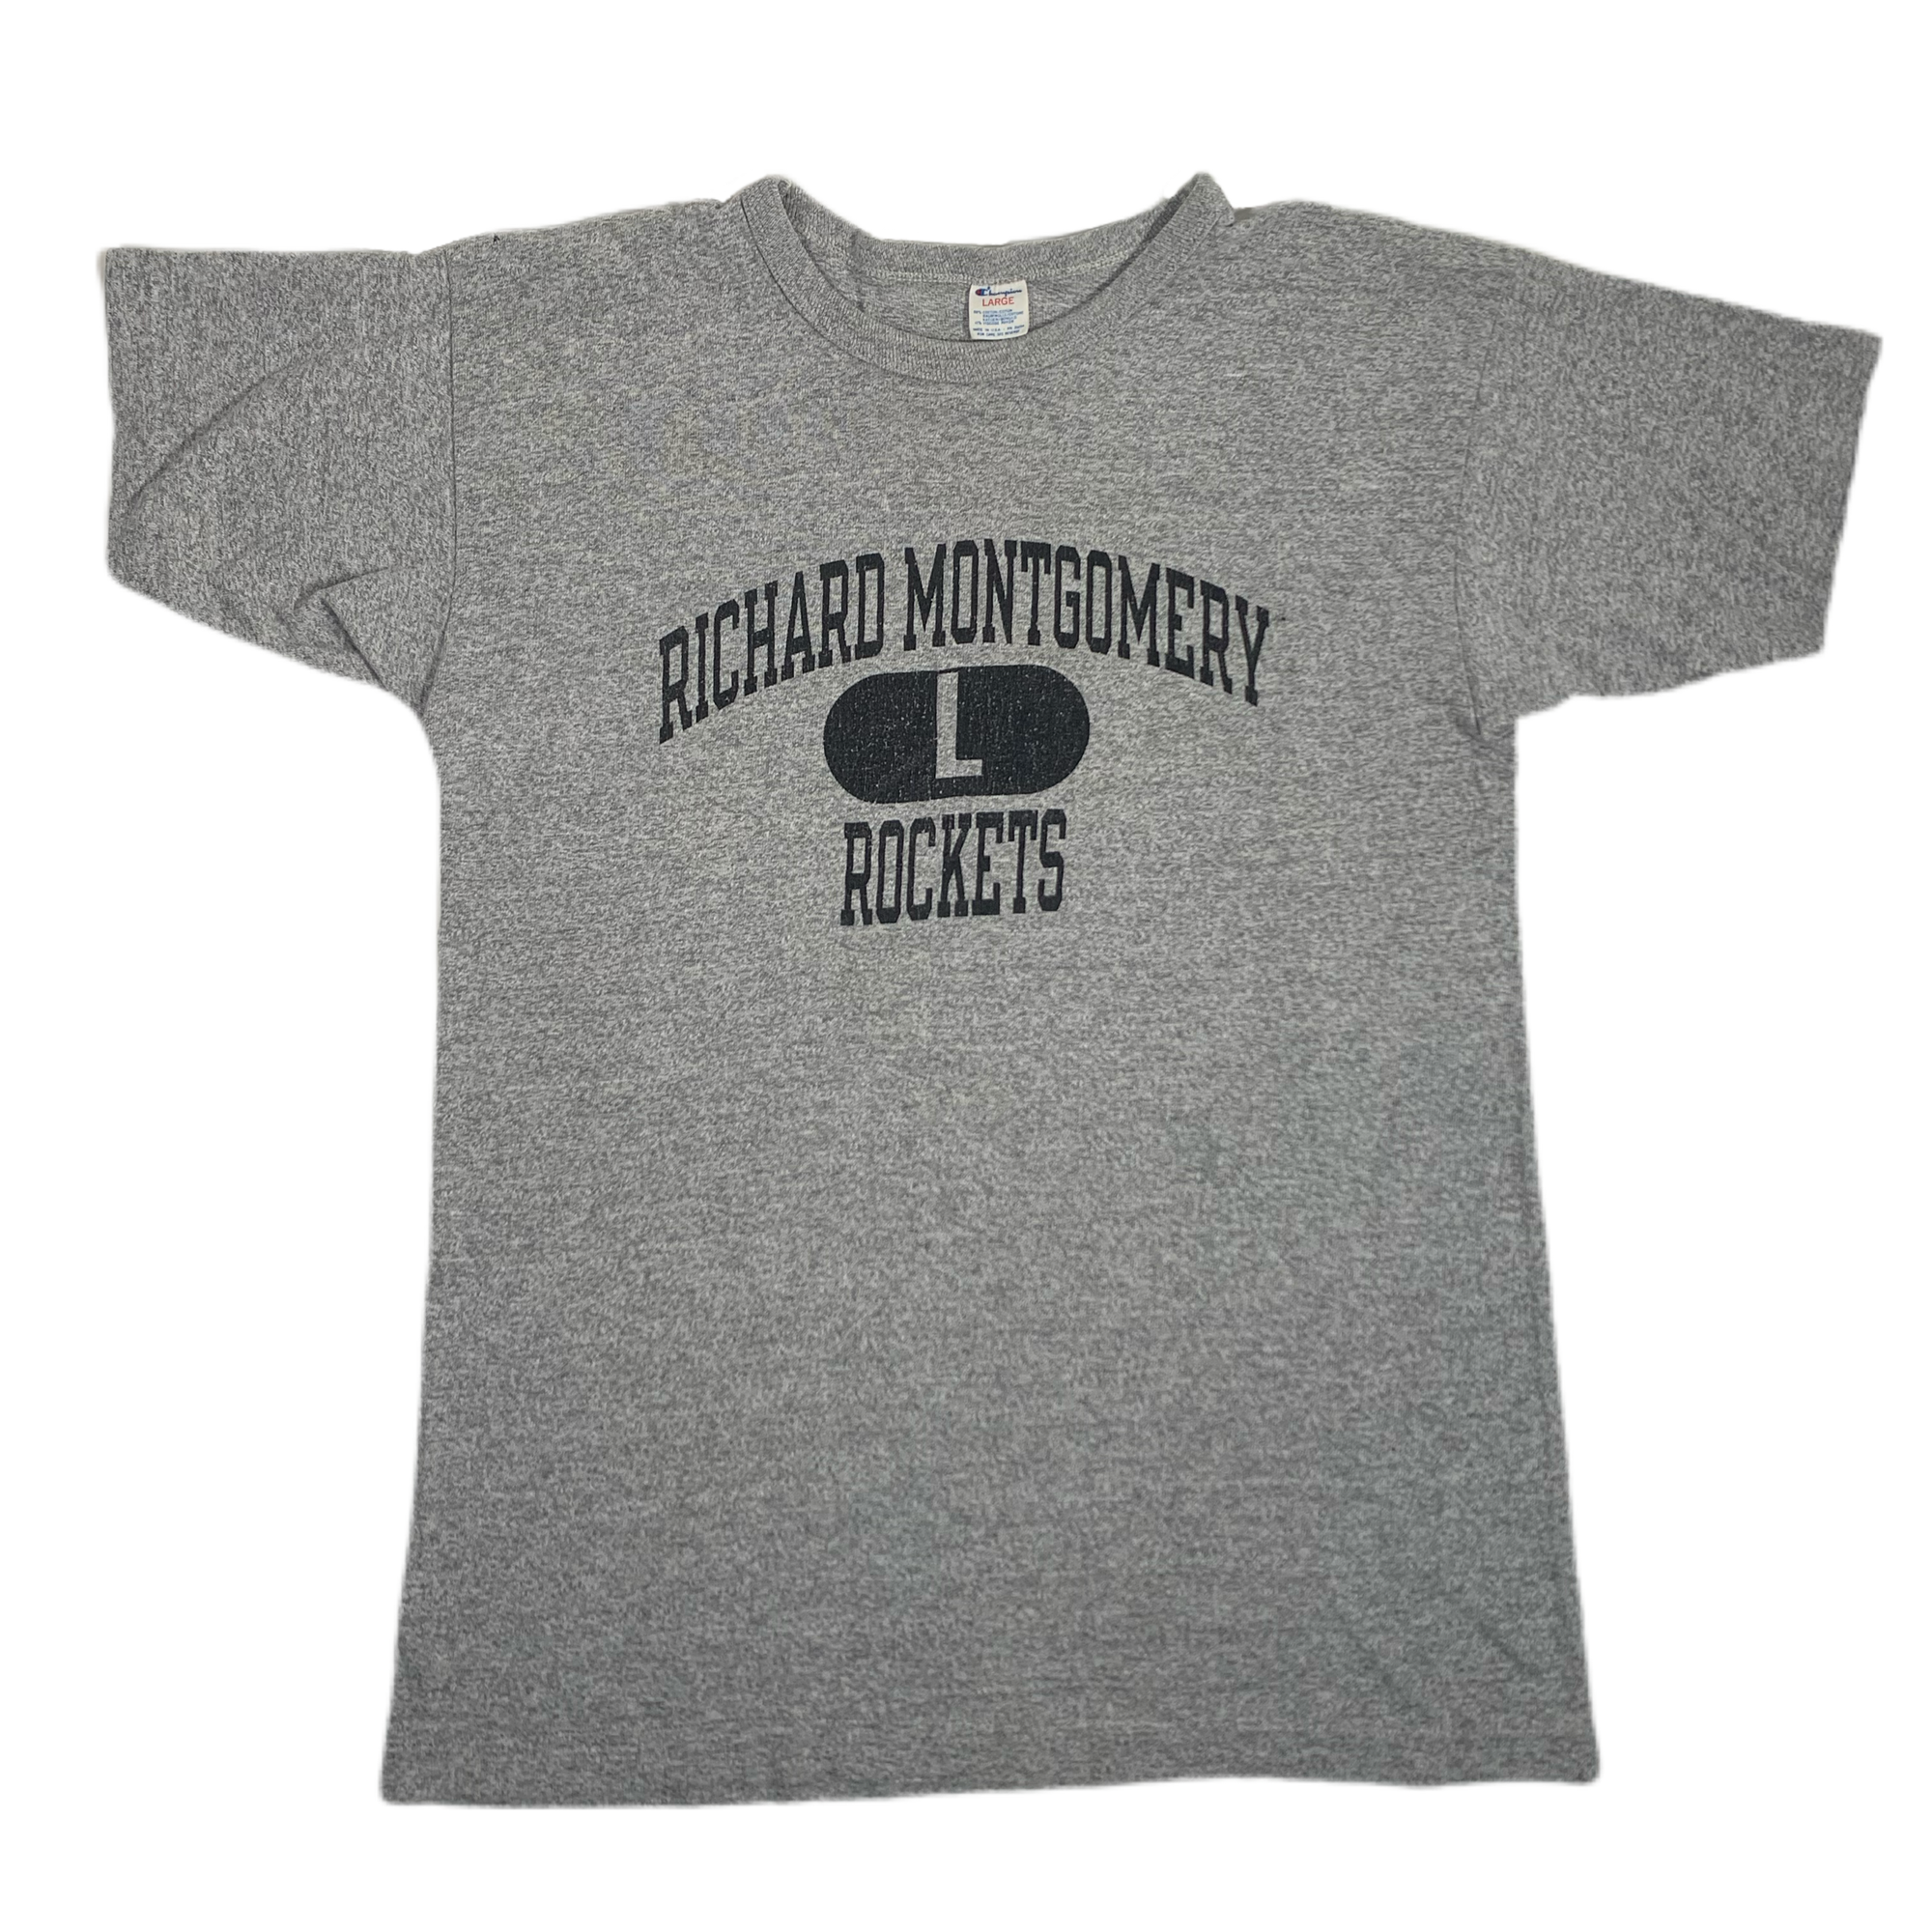 Vintage Champion Richard Montgomery “Rockets" T-Shirt - jointcustodydc